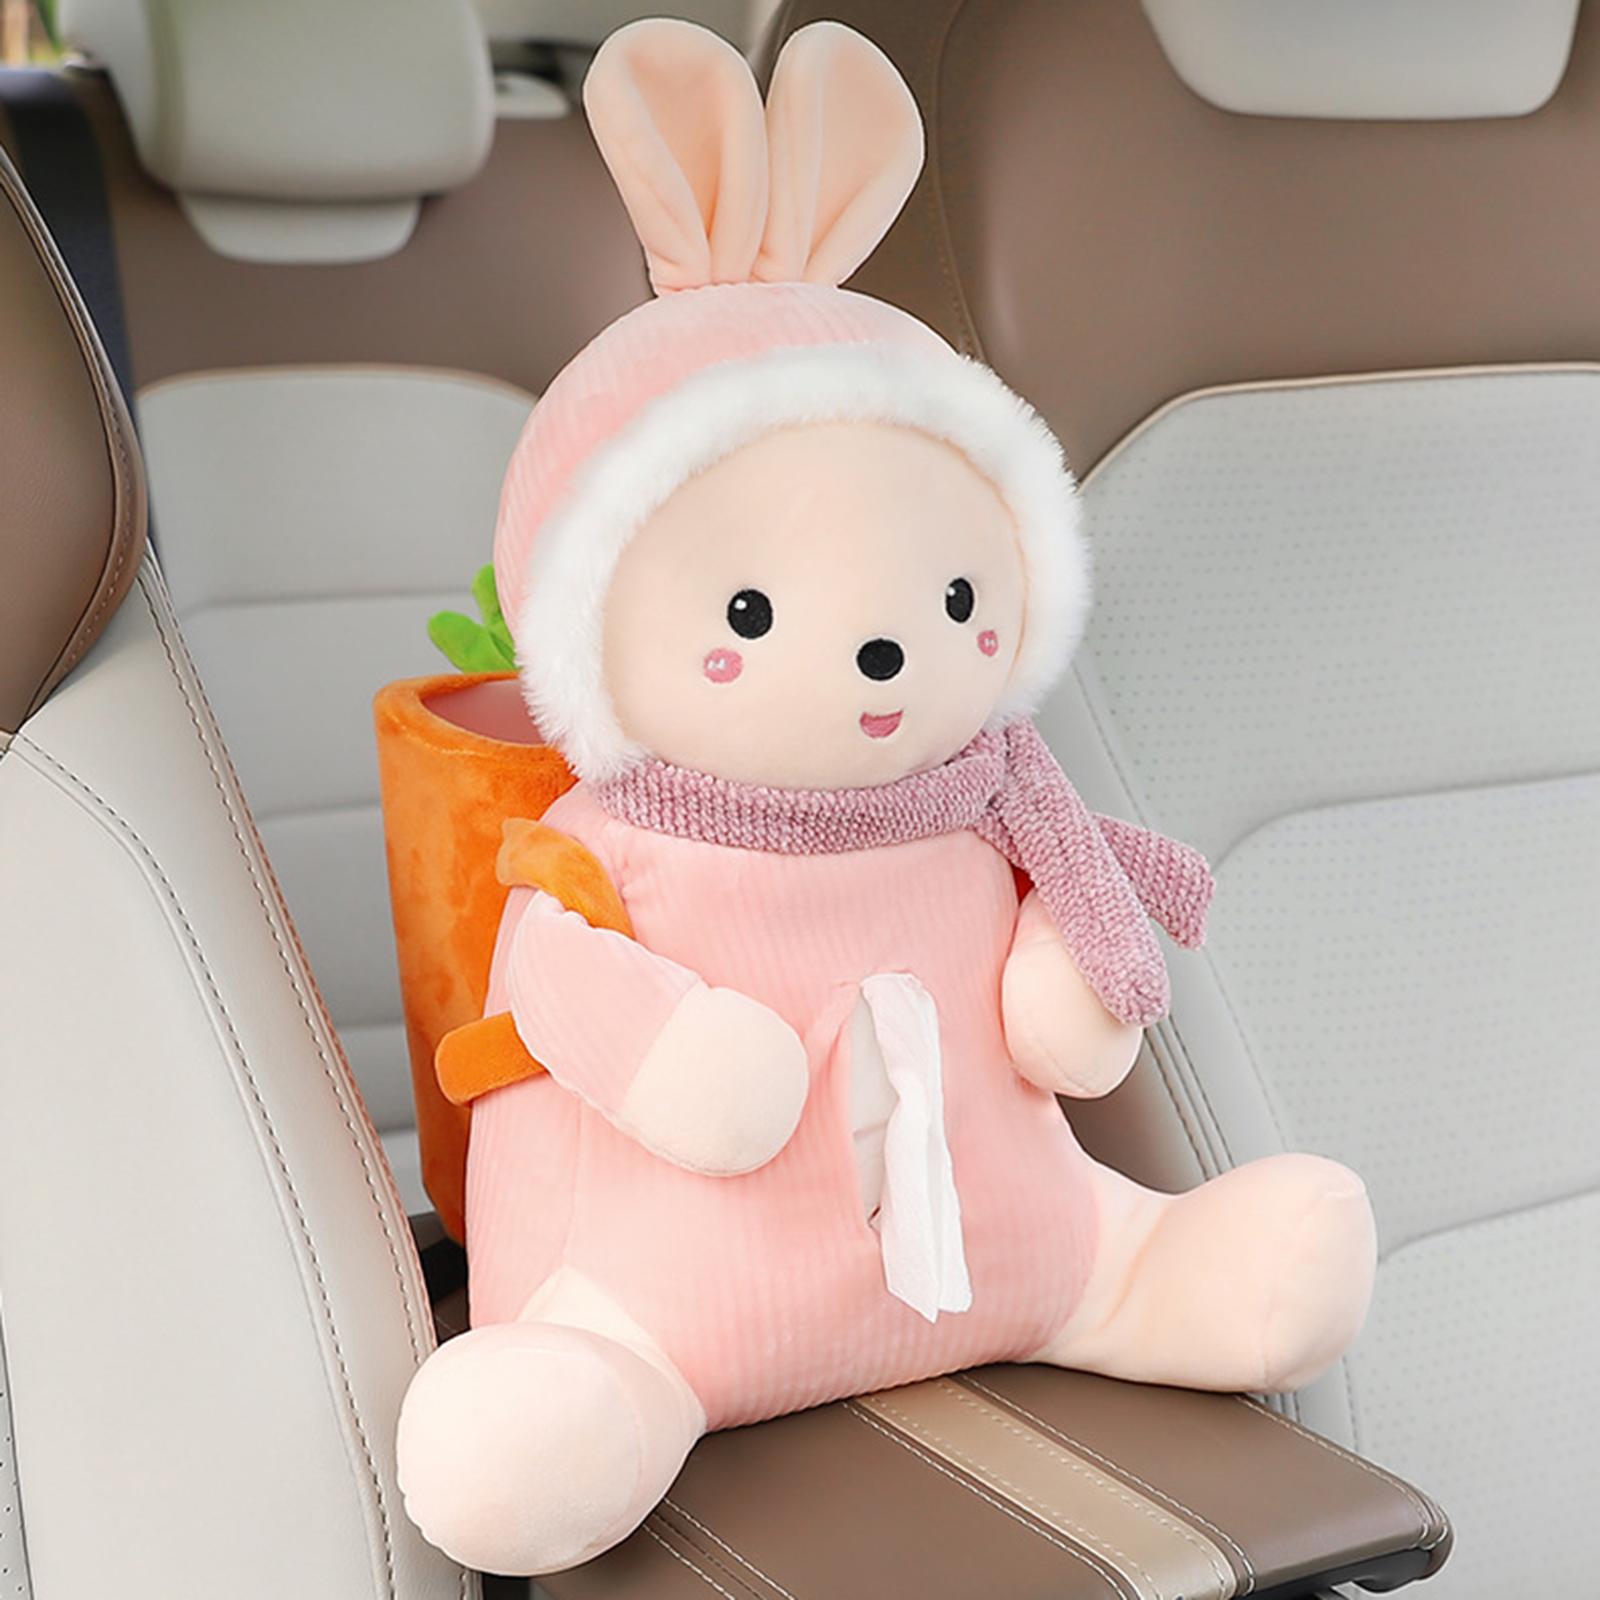 Car Cartoon Tissue Box Holder with Car Garbage Can Cute Plush Tissue Holder rabbit